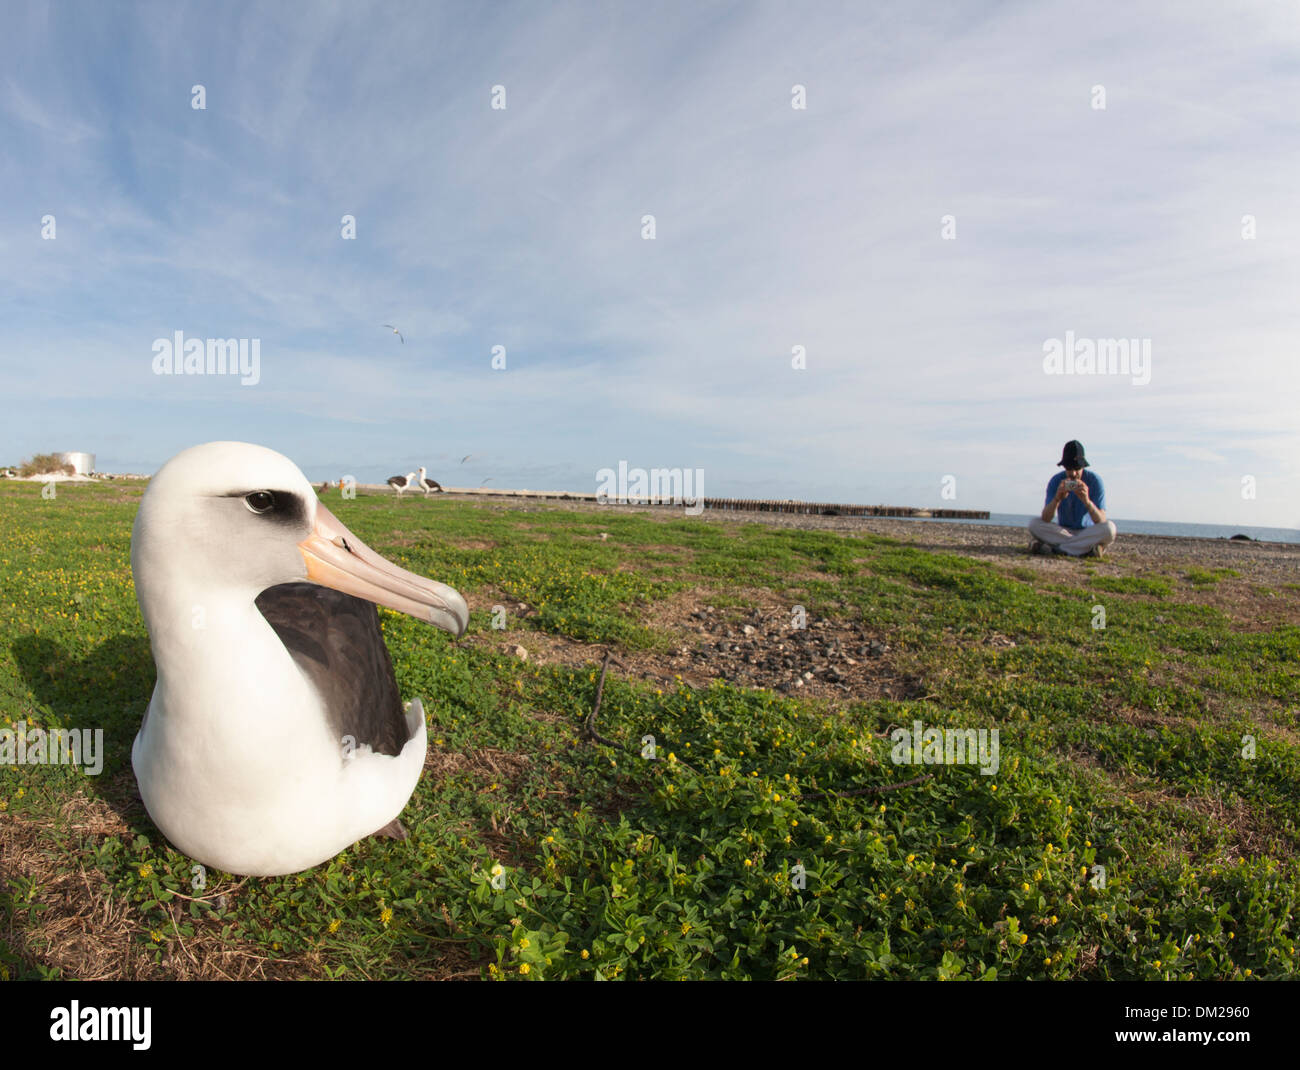 Laysan Albatross (Phoebastria immutabilis) con un uomo birdwatching Foto  stock - Alamy